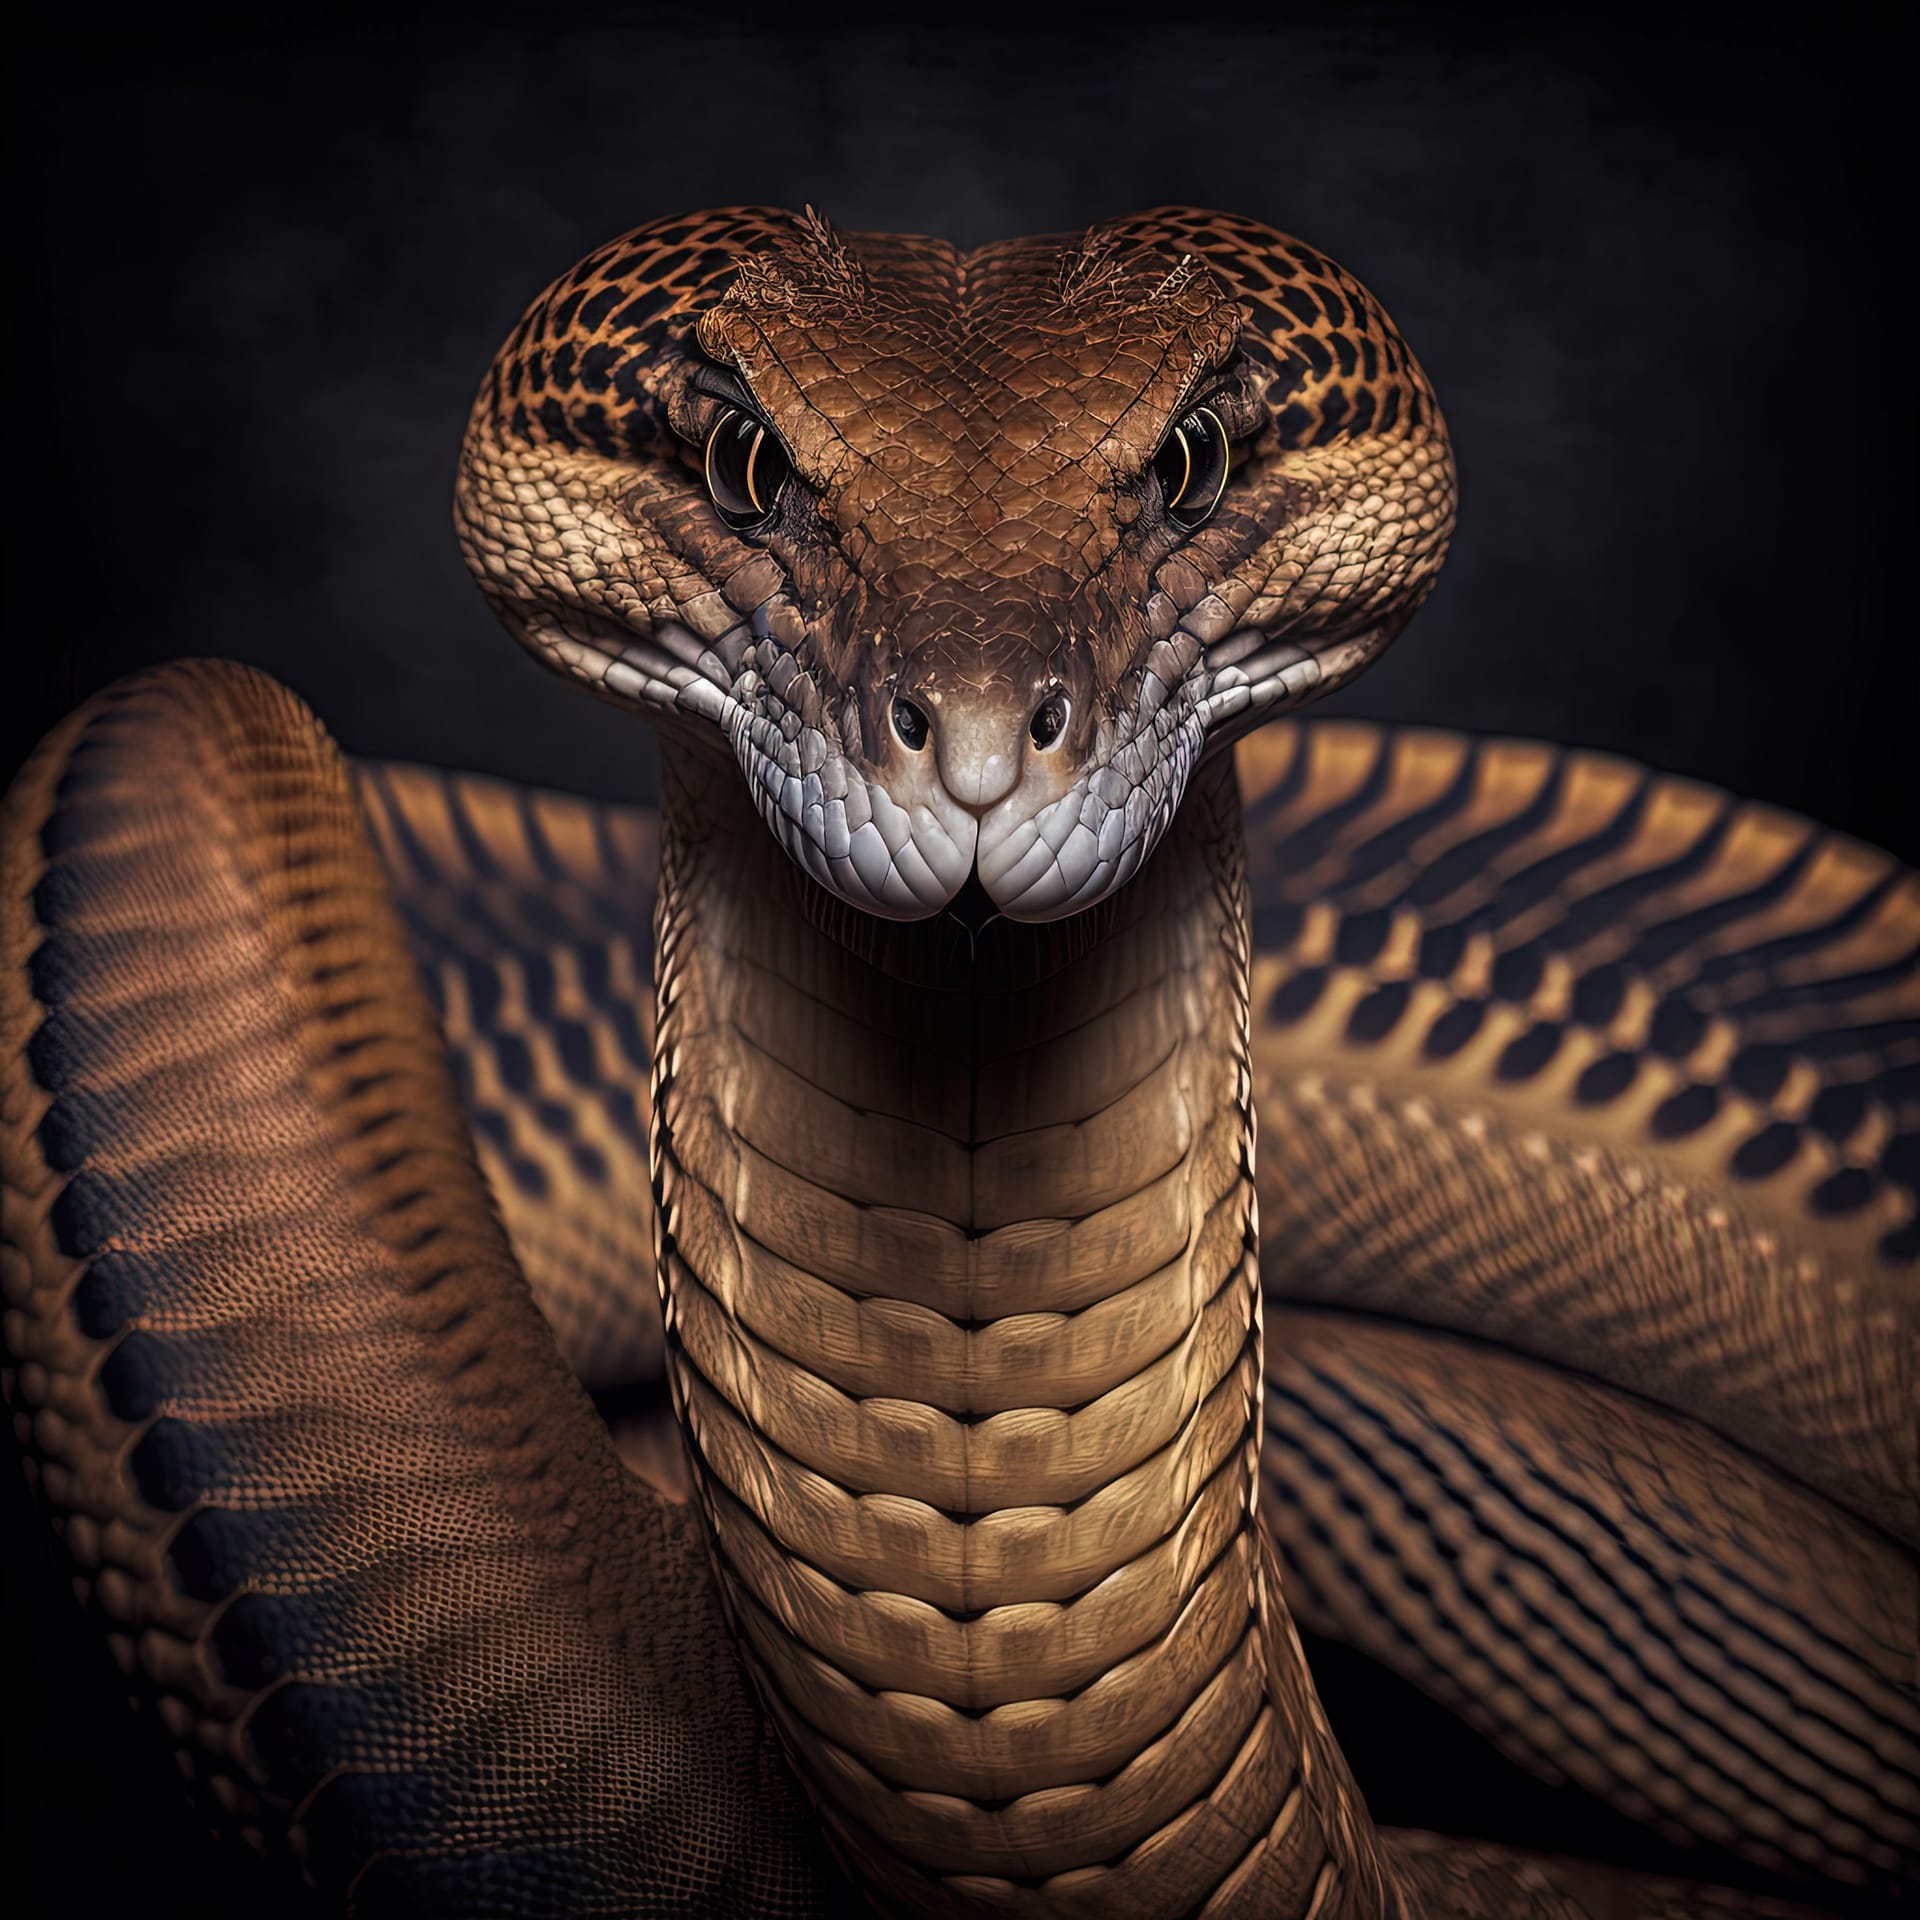 Snake portrait studio ultra realistic excellent image